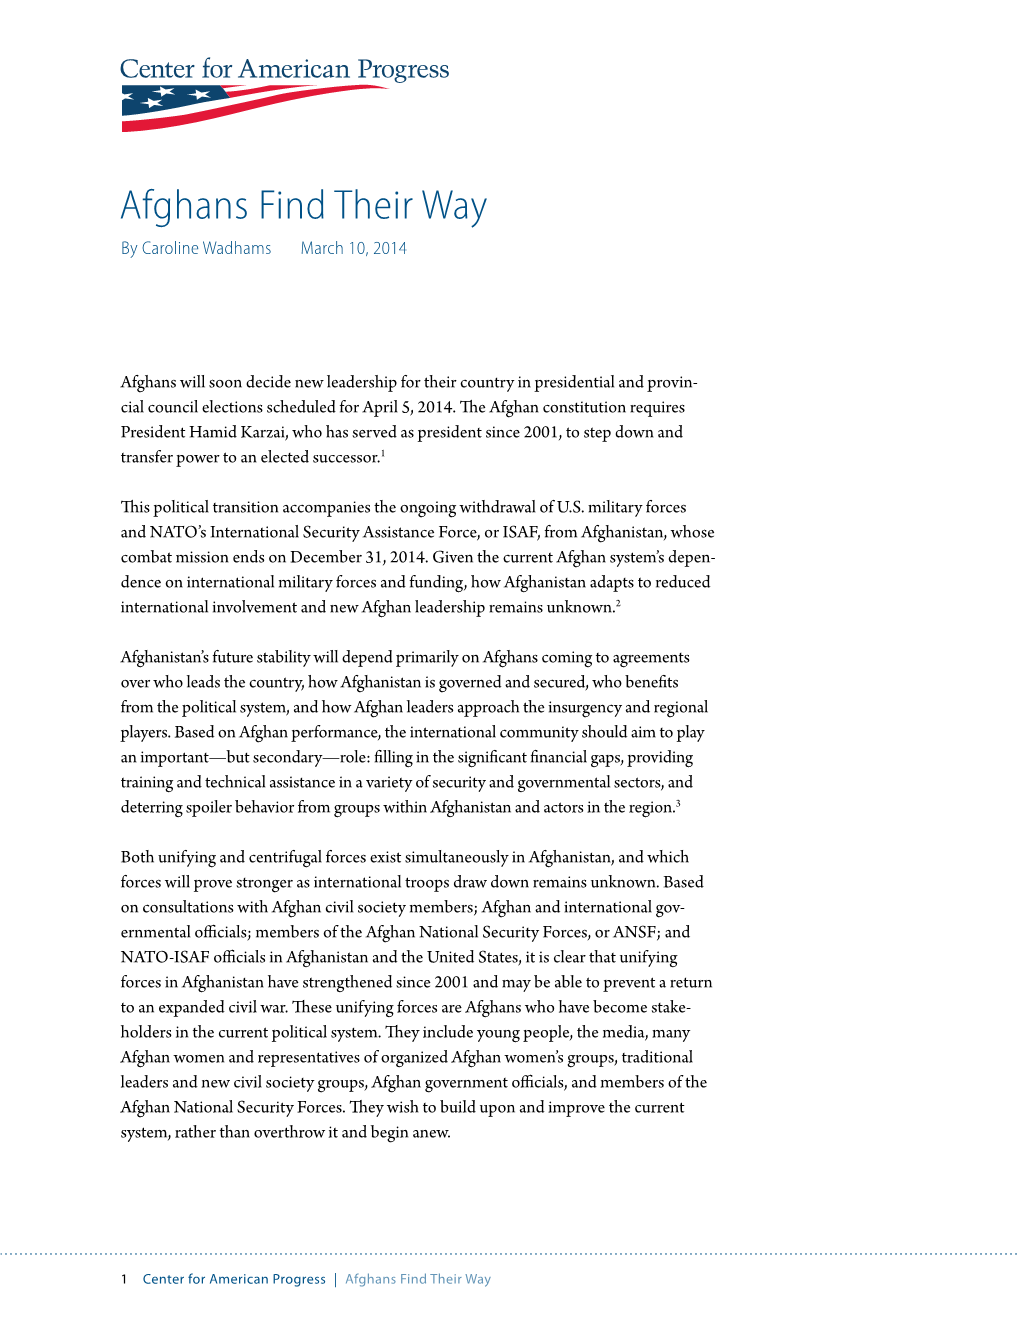 Afghans Find Their Way by Caroline Wadhams March 10, 2014